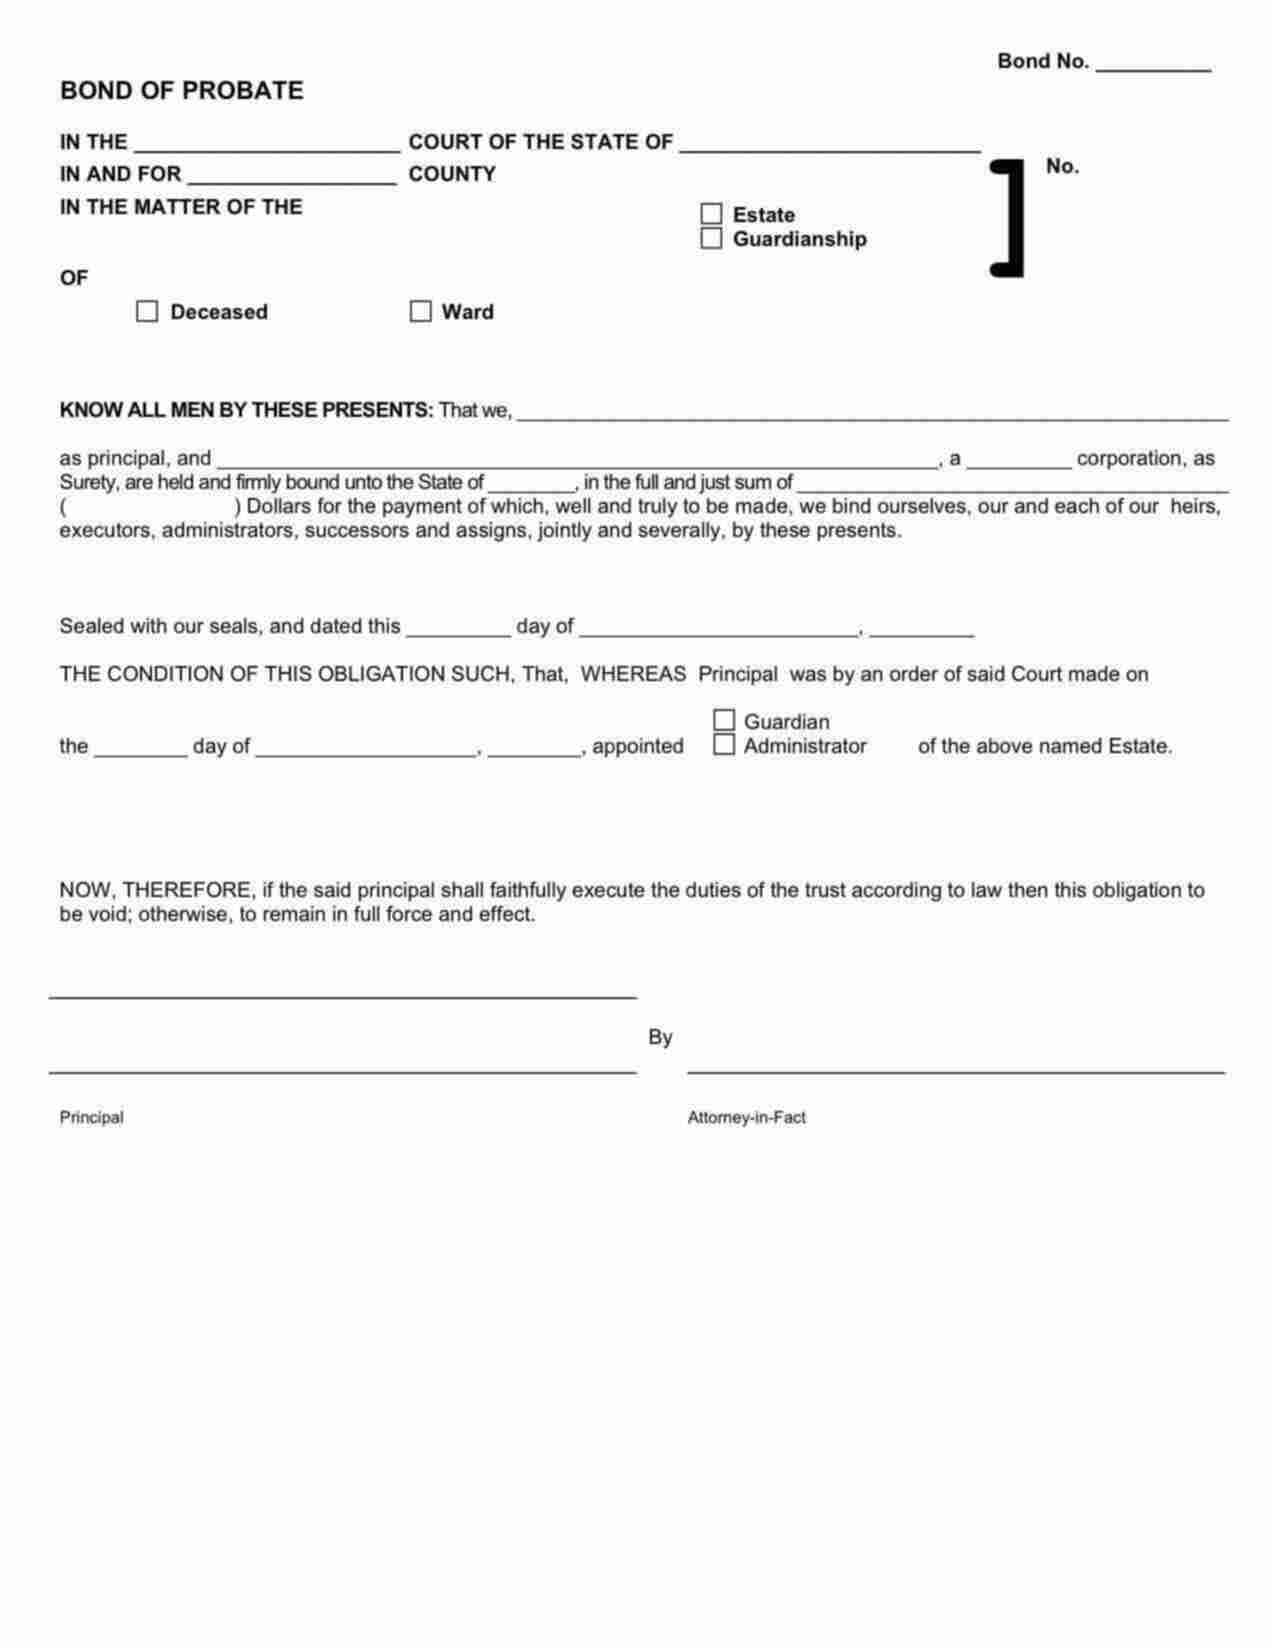 Iowa Administrator/Executor Bond Form